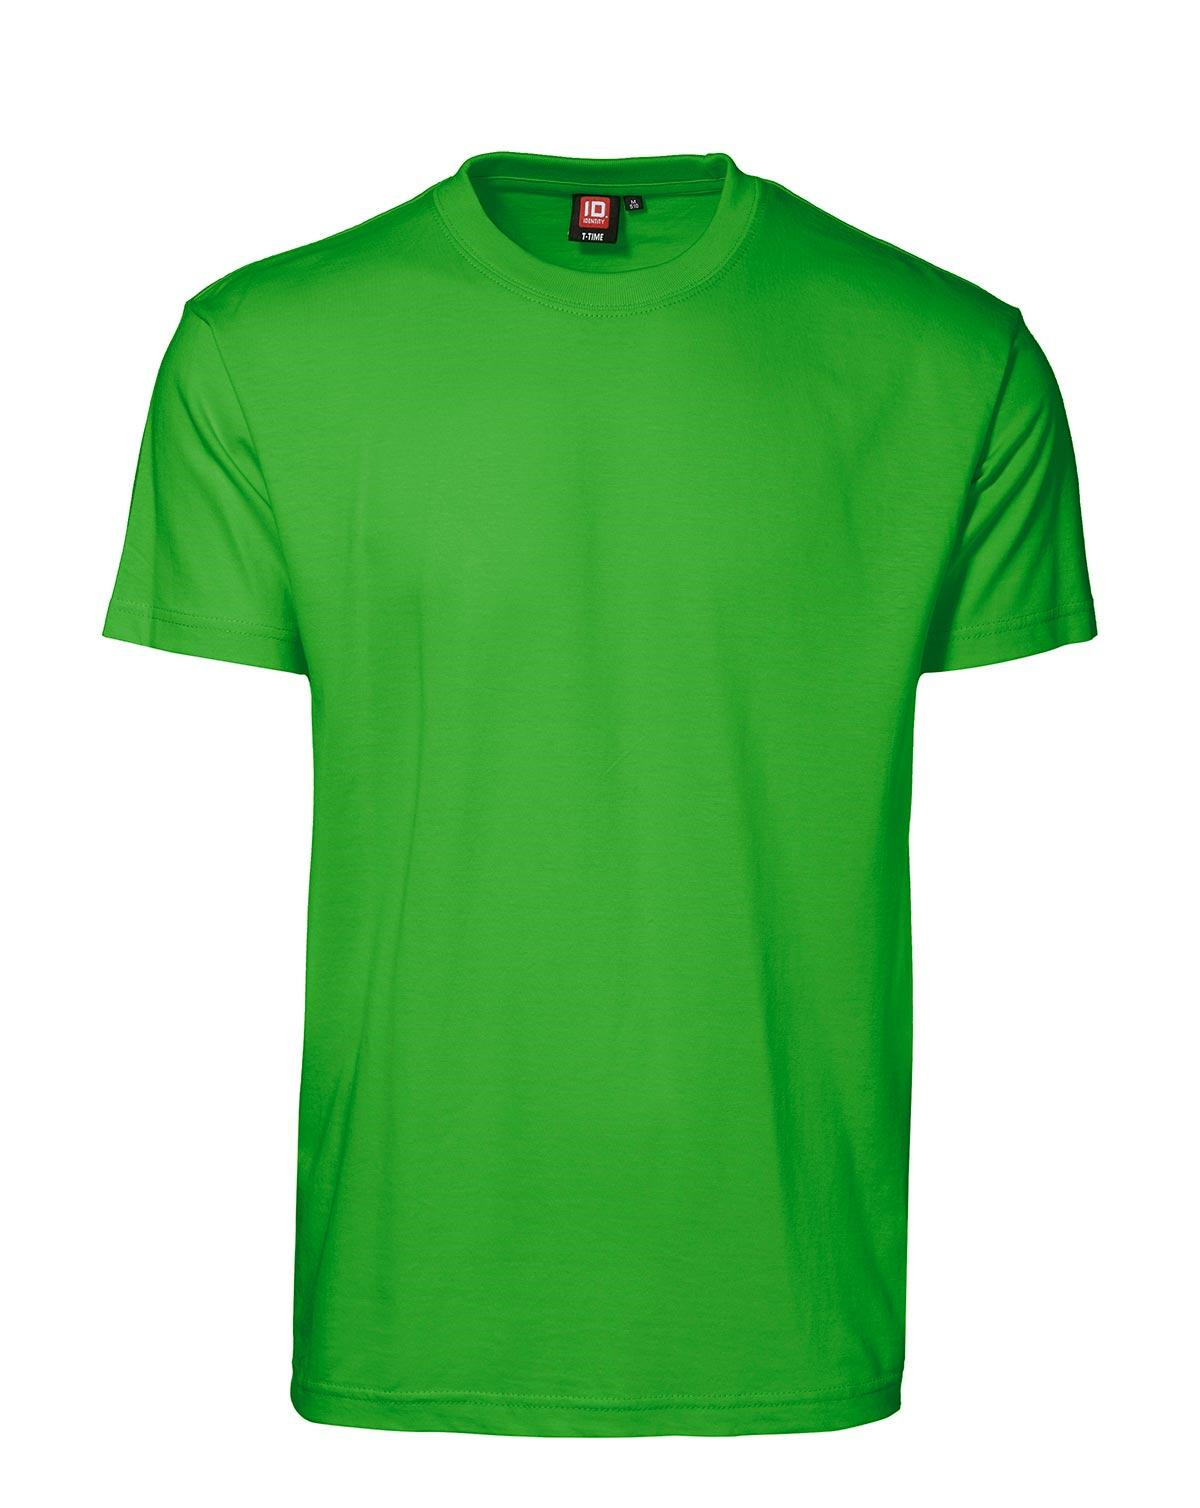 ID T-Time T-shirt, rund hals (Grøn, S)